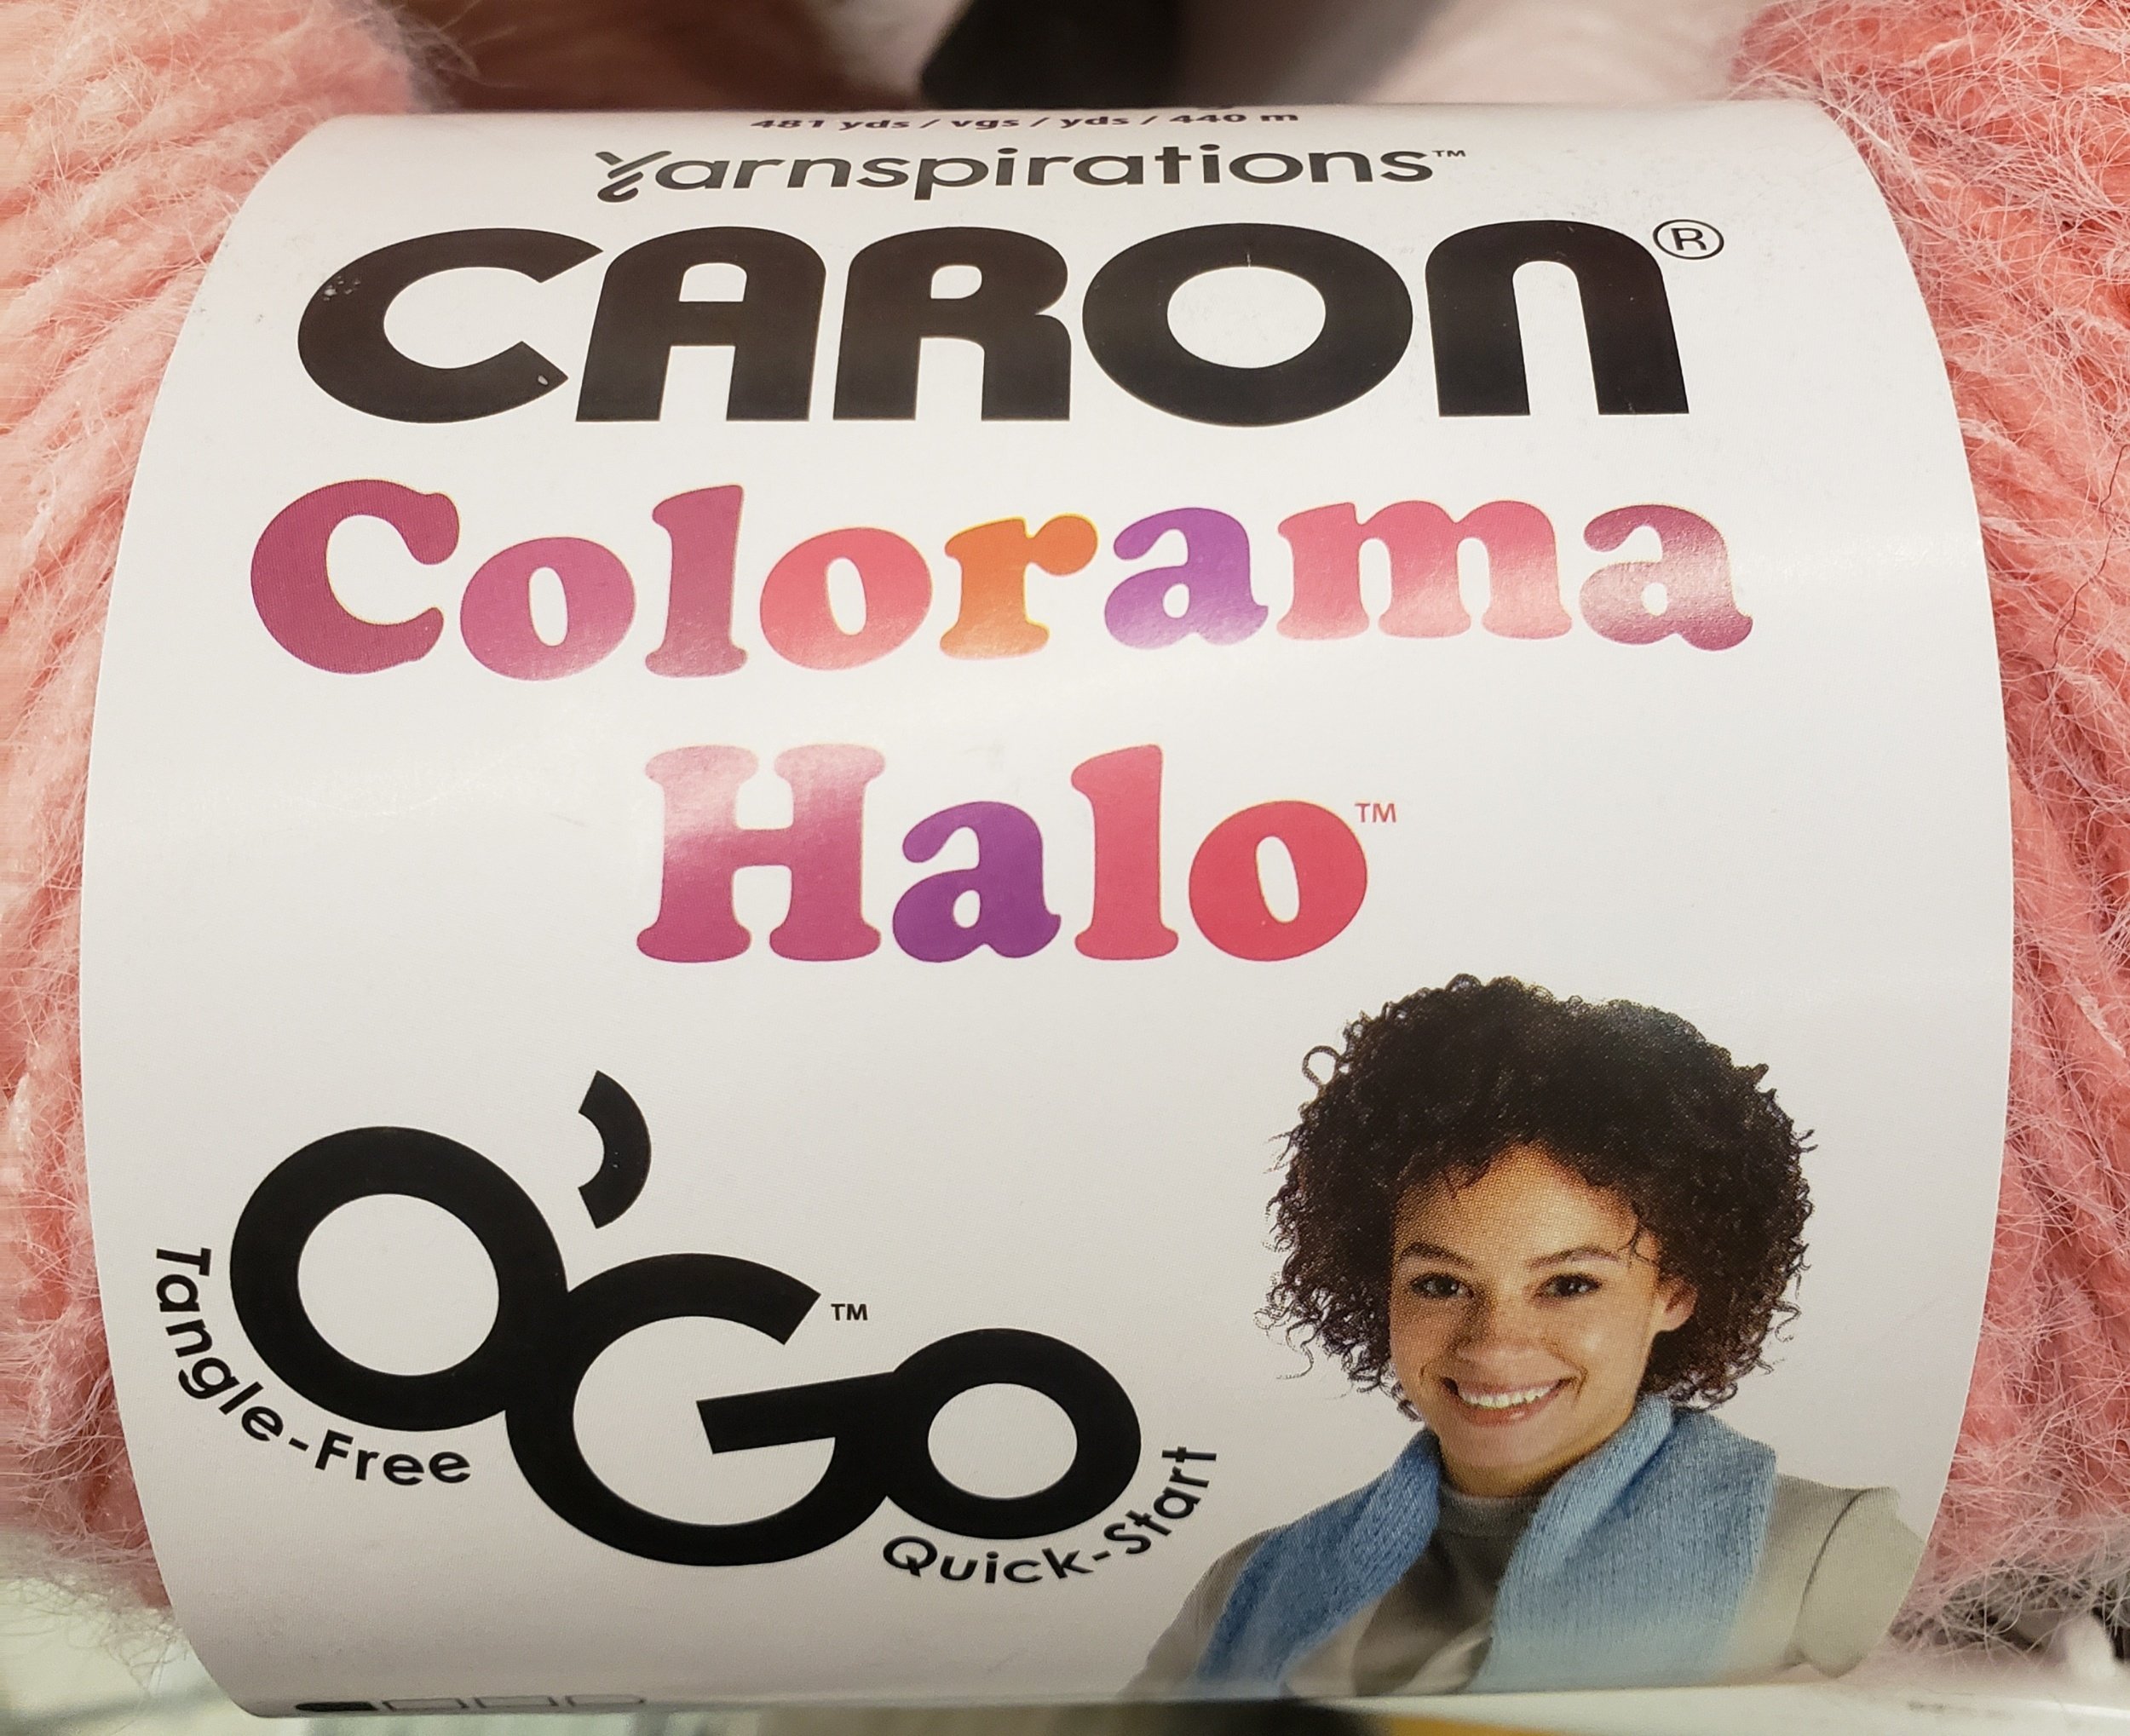 NEW Caron Yarn Review Colorama Halo Yarn 